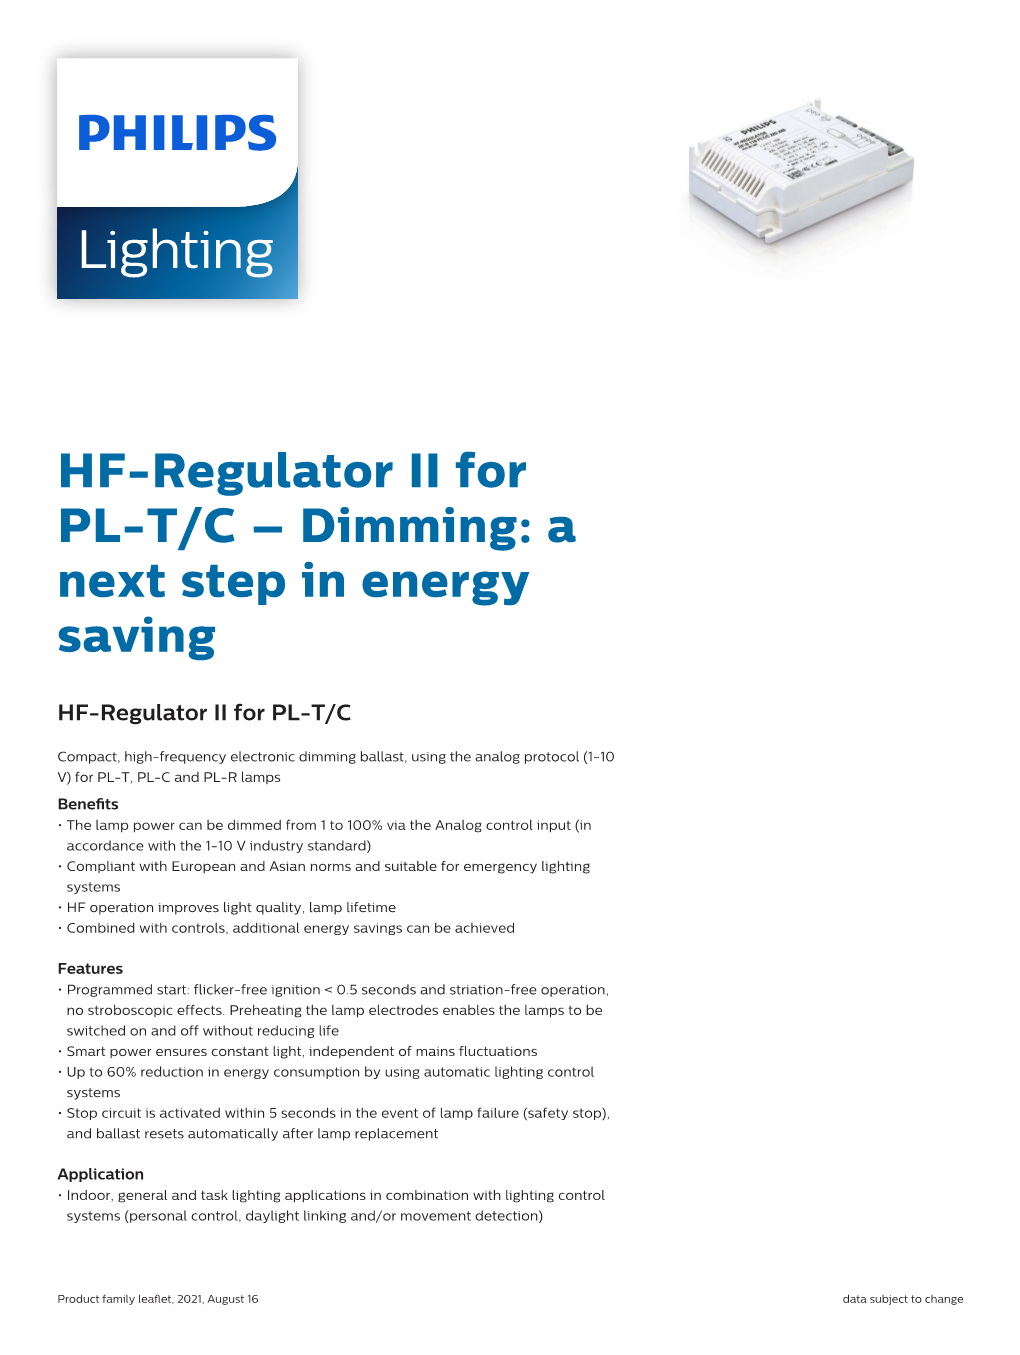 HF-Regulator II for PL-T/C |